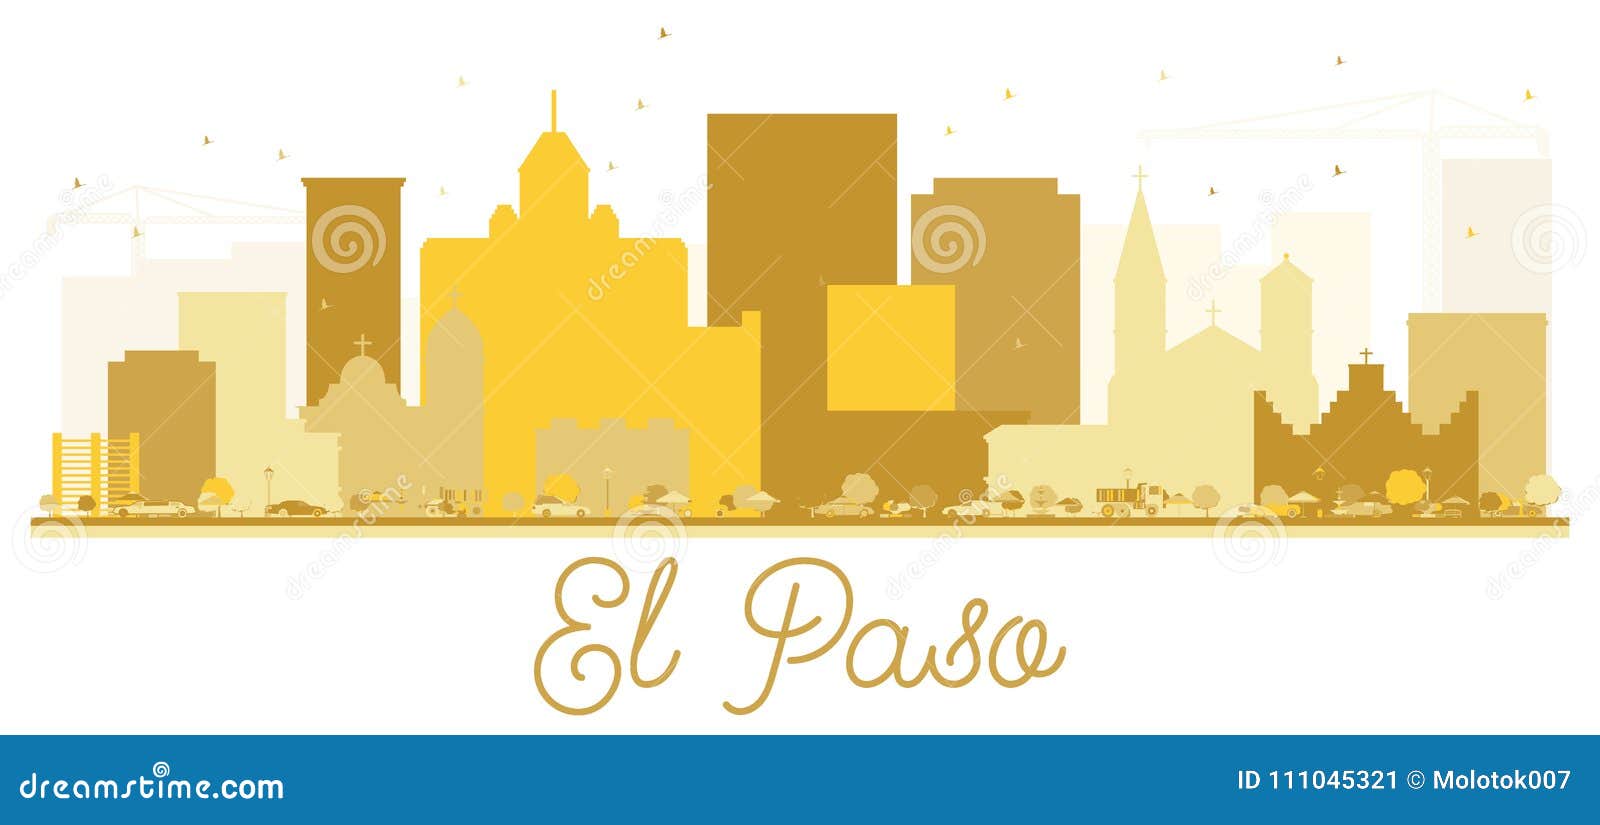 el paso texas usa city skyline golden silhouette.